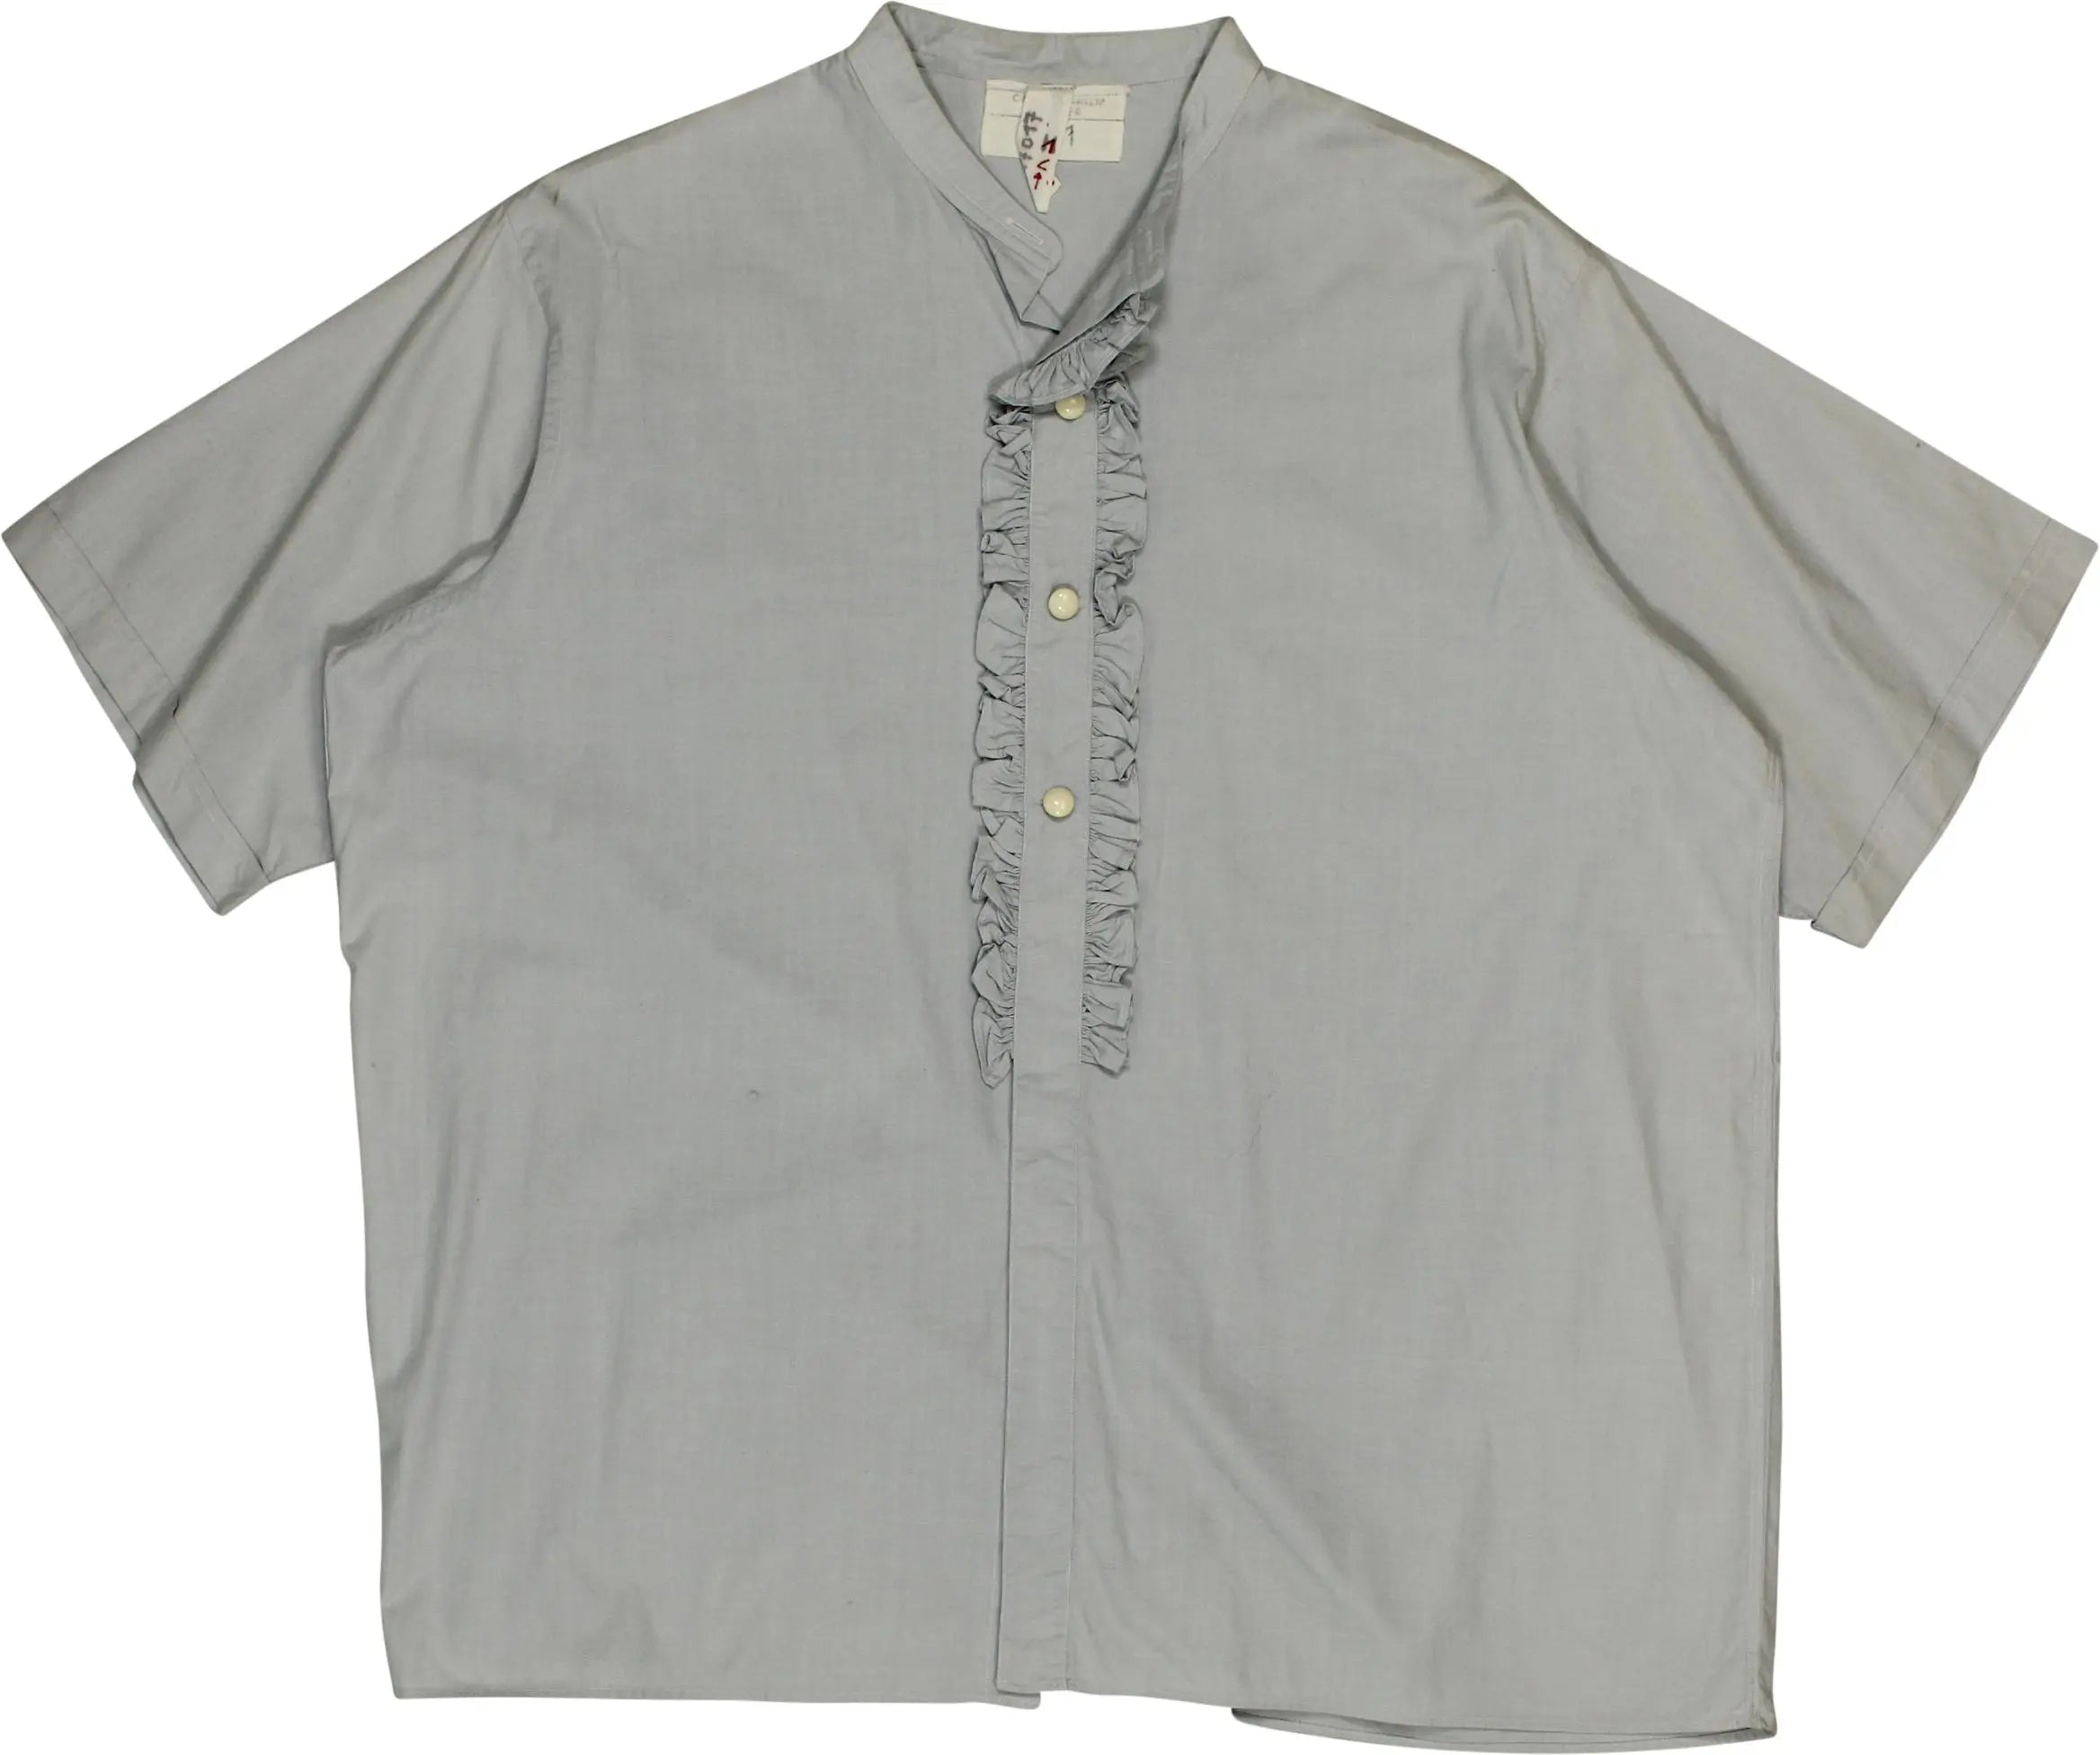 Handmade - Handmade Short Sleeve Shirt- ThriftTale.com - Vintage and second handclothing